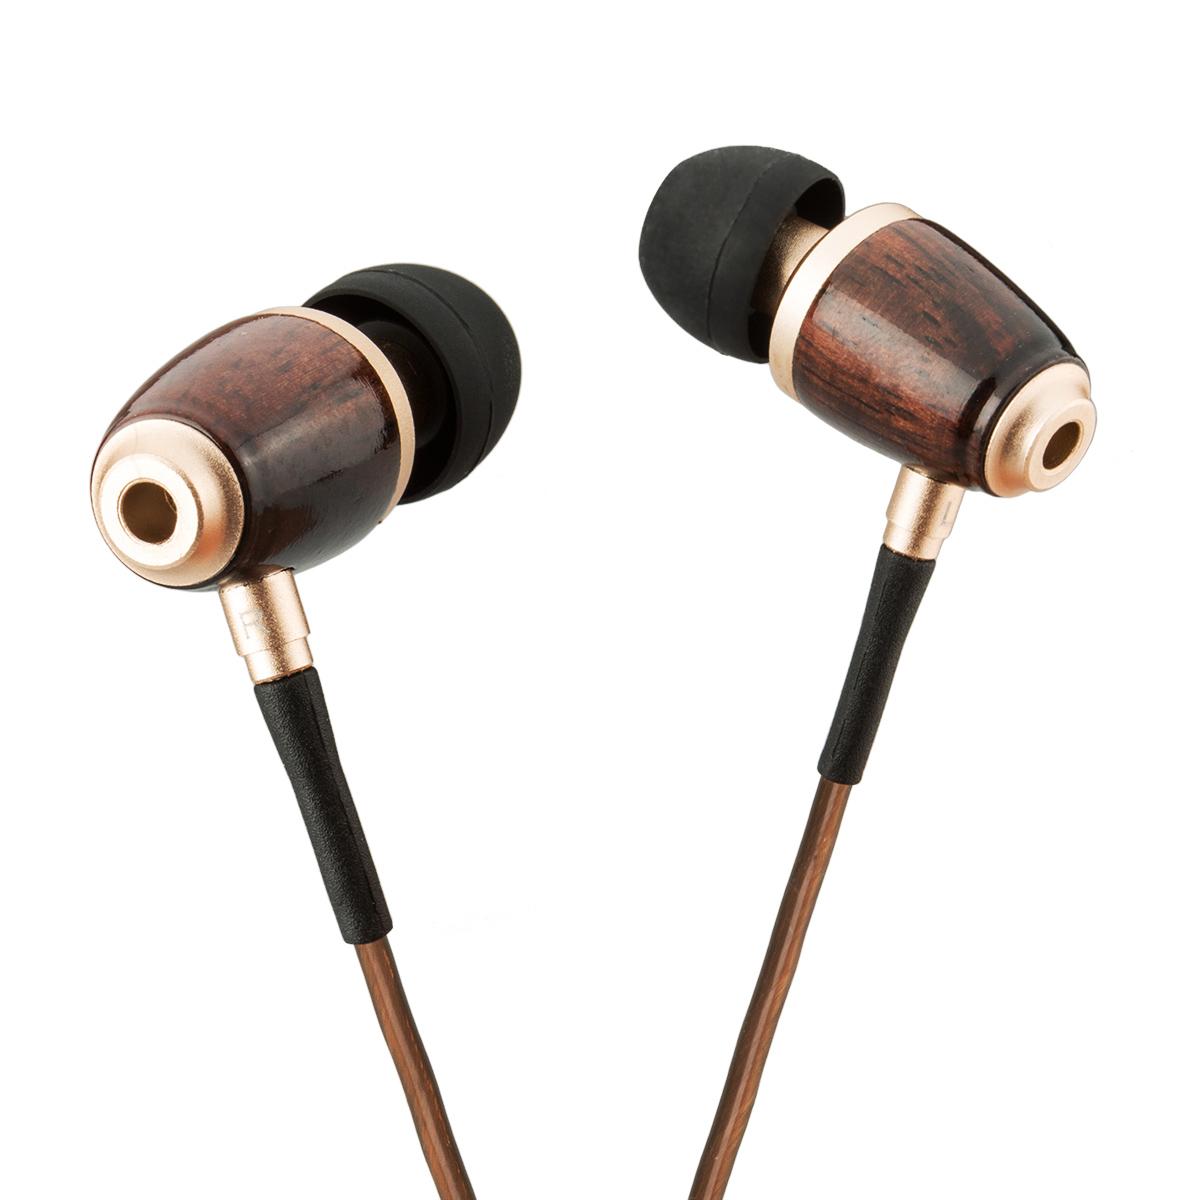 DIKOO Earphone Wood Wooden In Ear Headphones Prenmium Genuine Noise Cancelling Earphones With Microphone For Samsung S8 iphone x 8